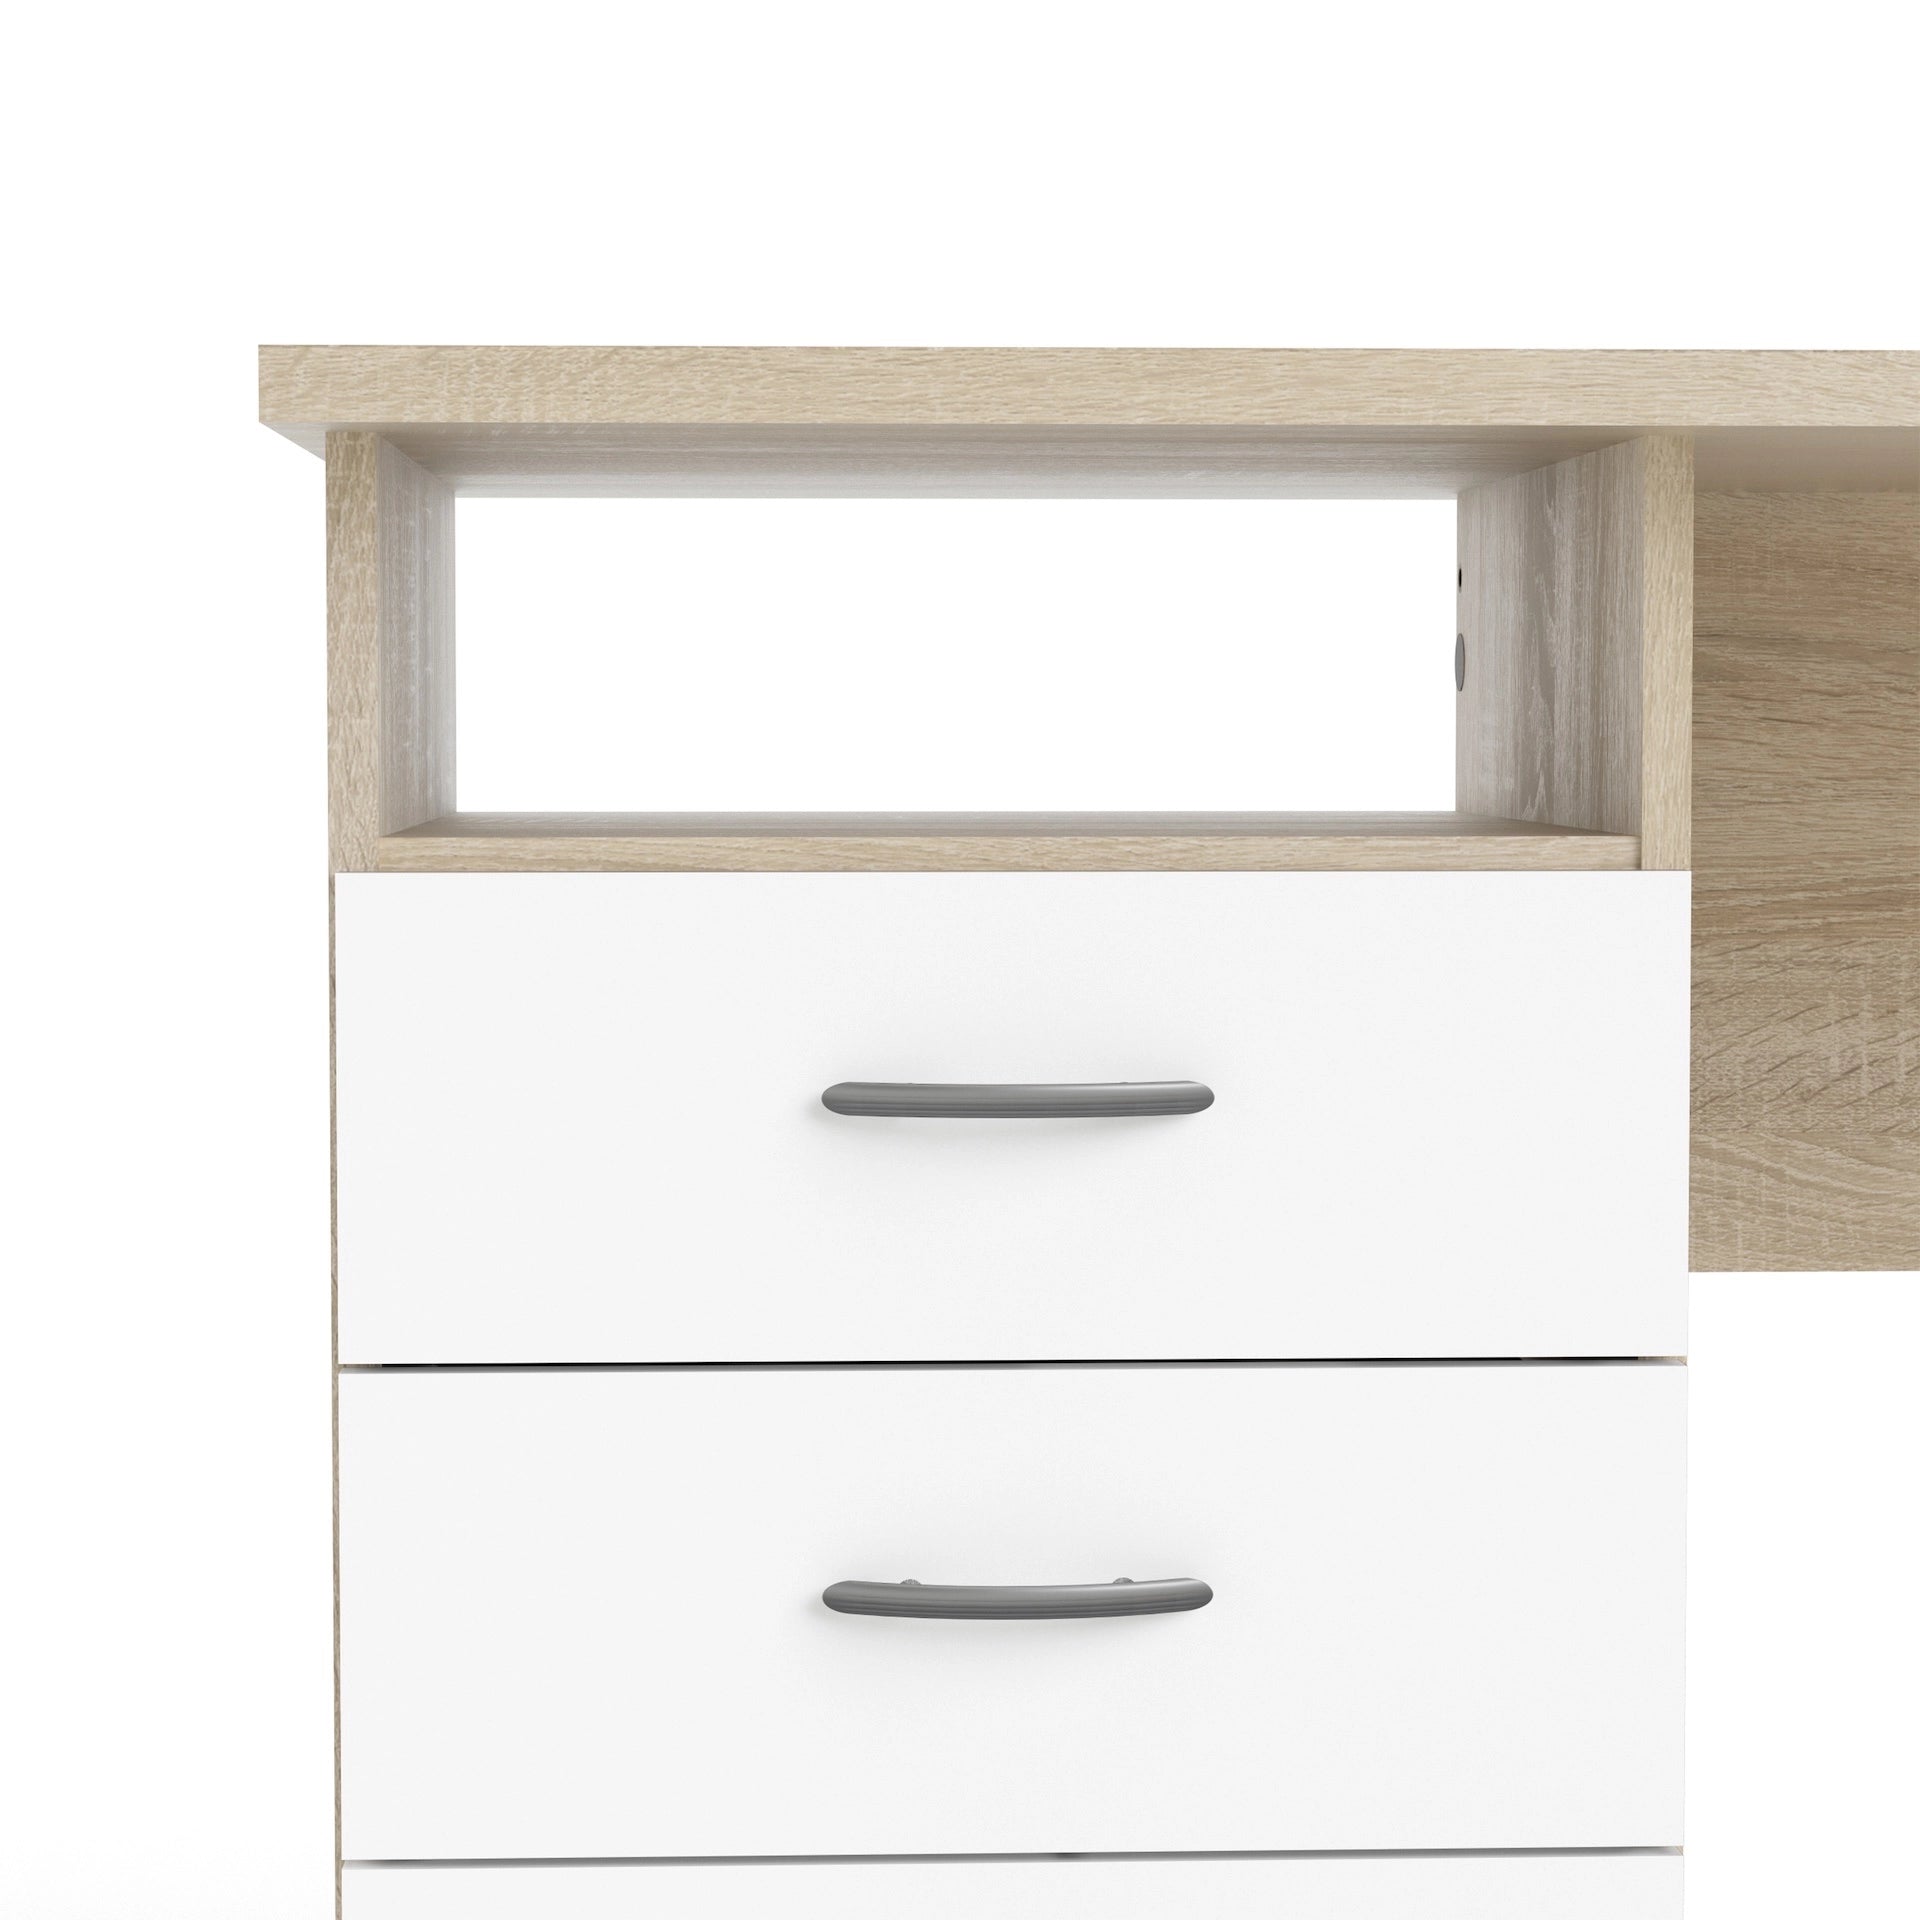 Furniture To Go Function Plus Oak Desk 3 White Drawers